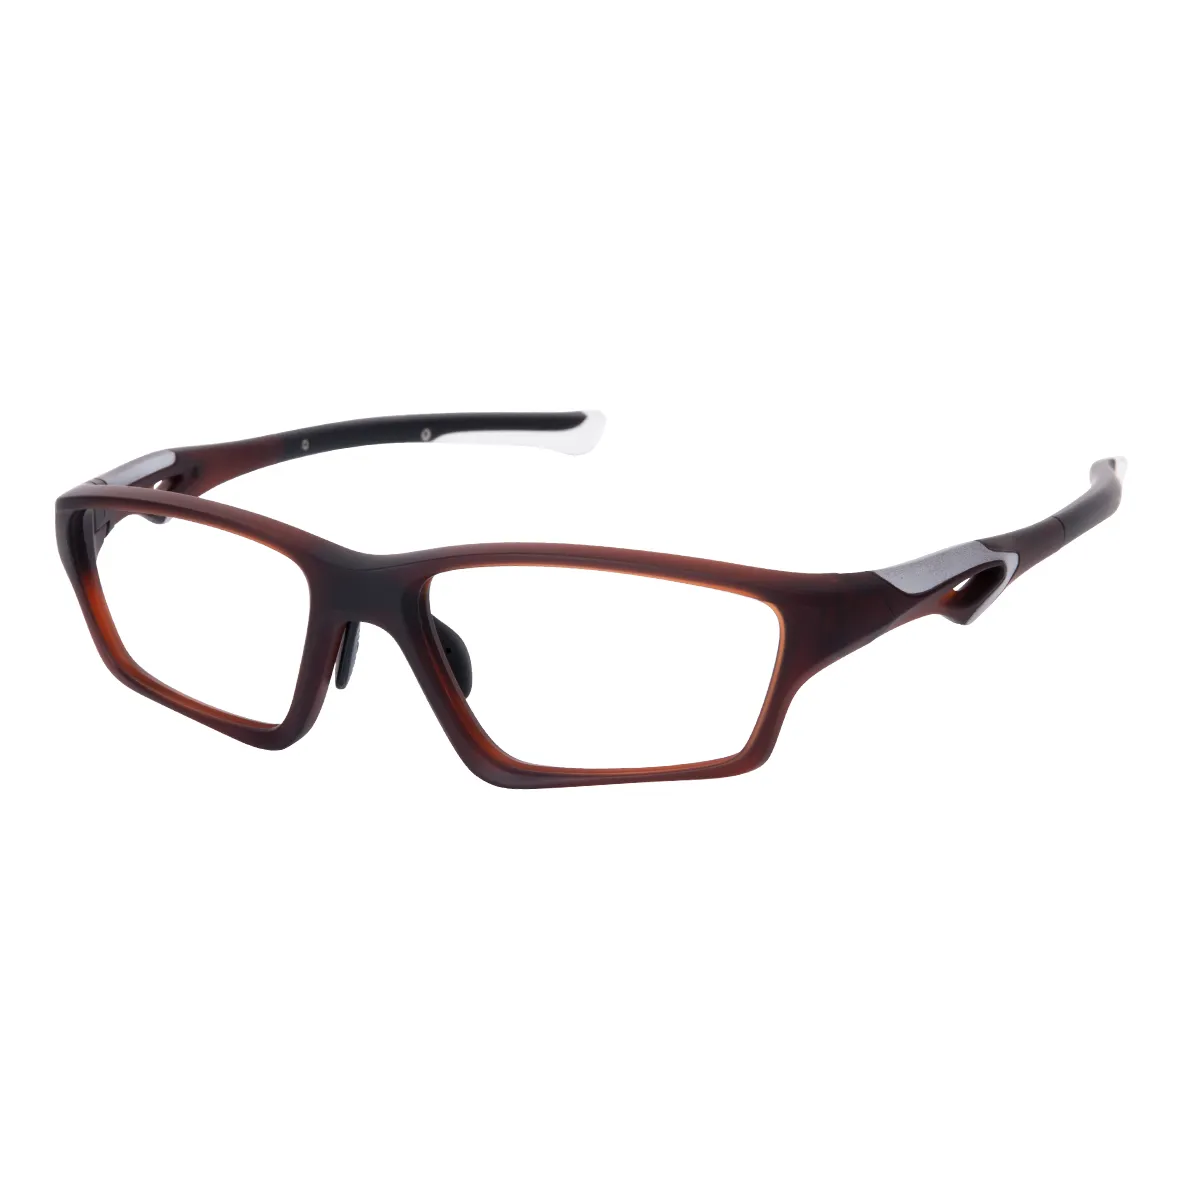 Lucian - Rectangle Brown Glasses for Men